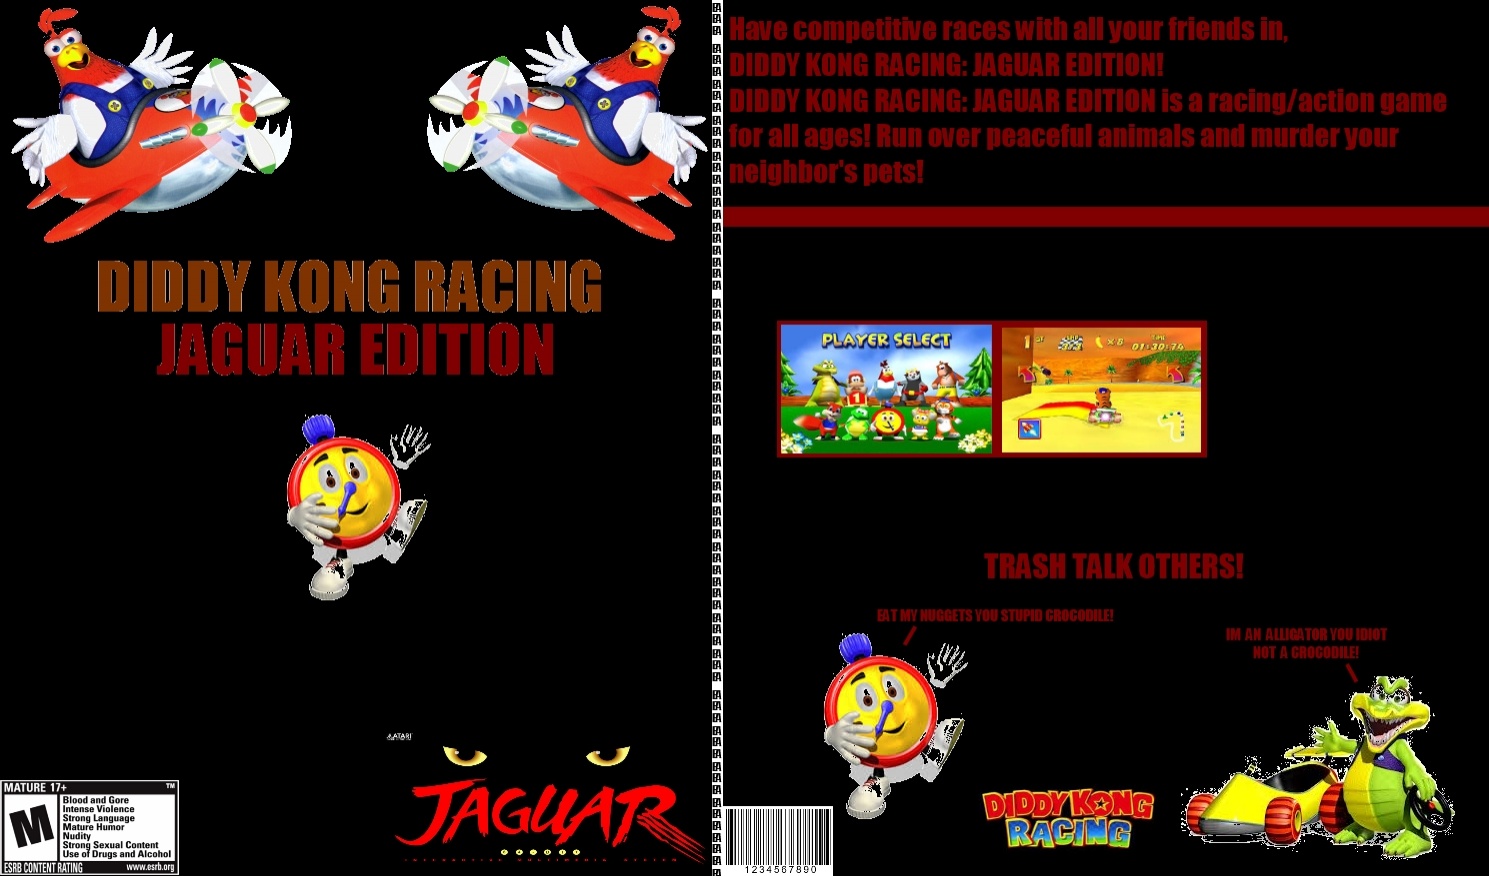 Diddy Kong Racing: JAGUAR EDITION box cover